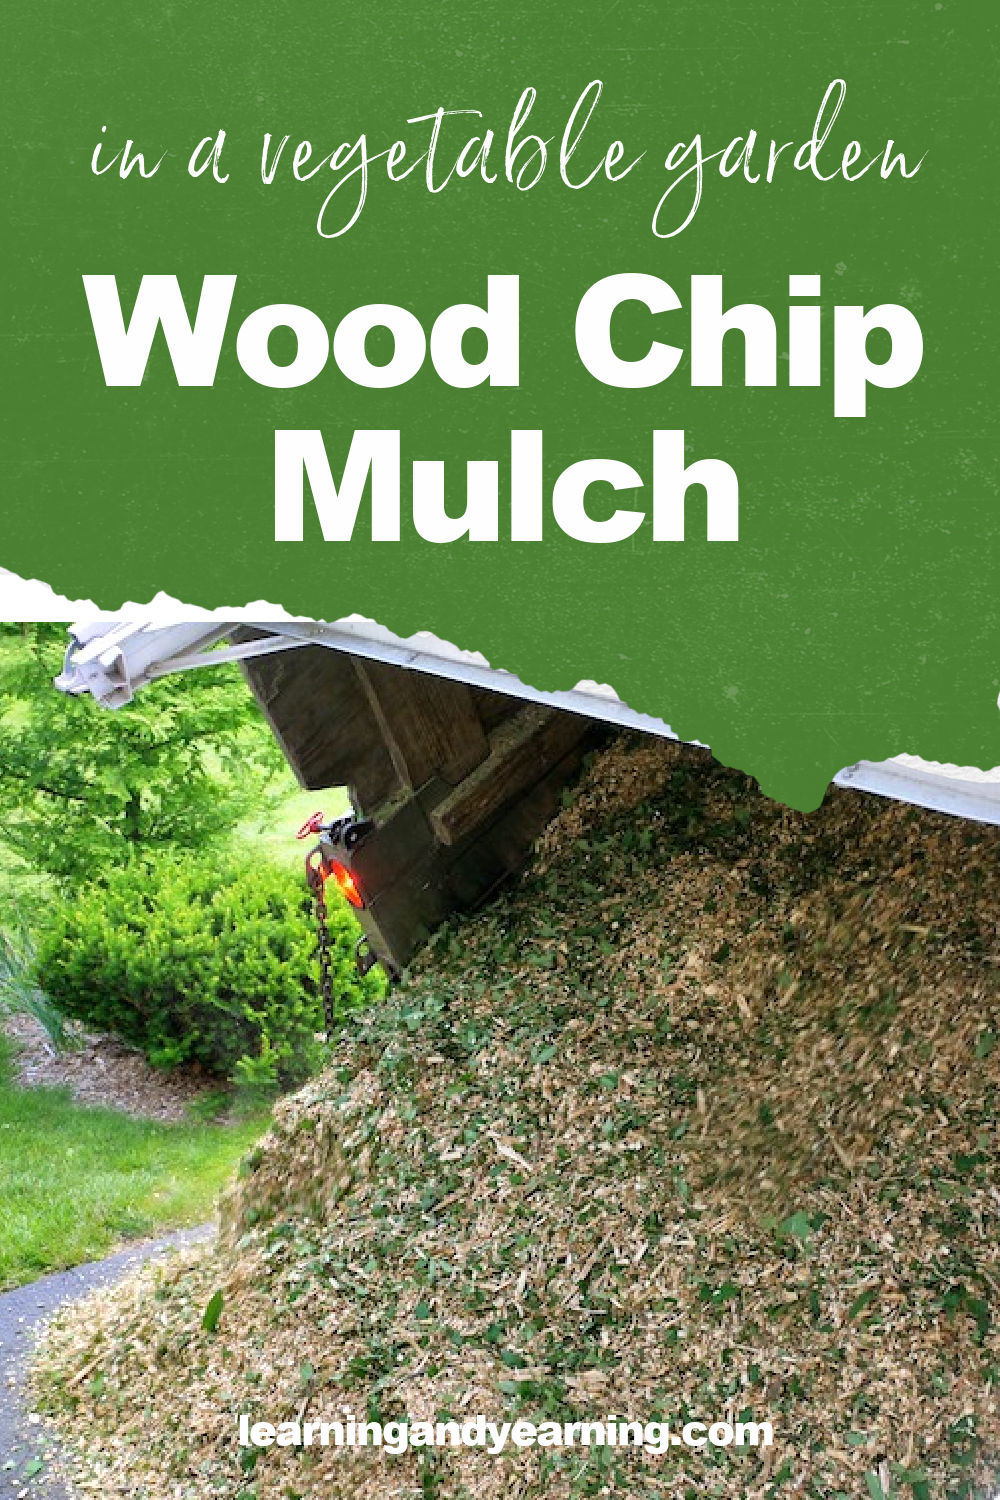 https://learningandyearning.com/wp-content/uploads/2015/04/wood-chip-mulch-in-vegetable-garden.jpg